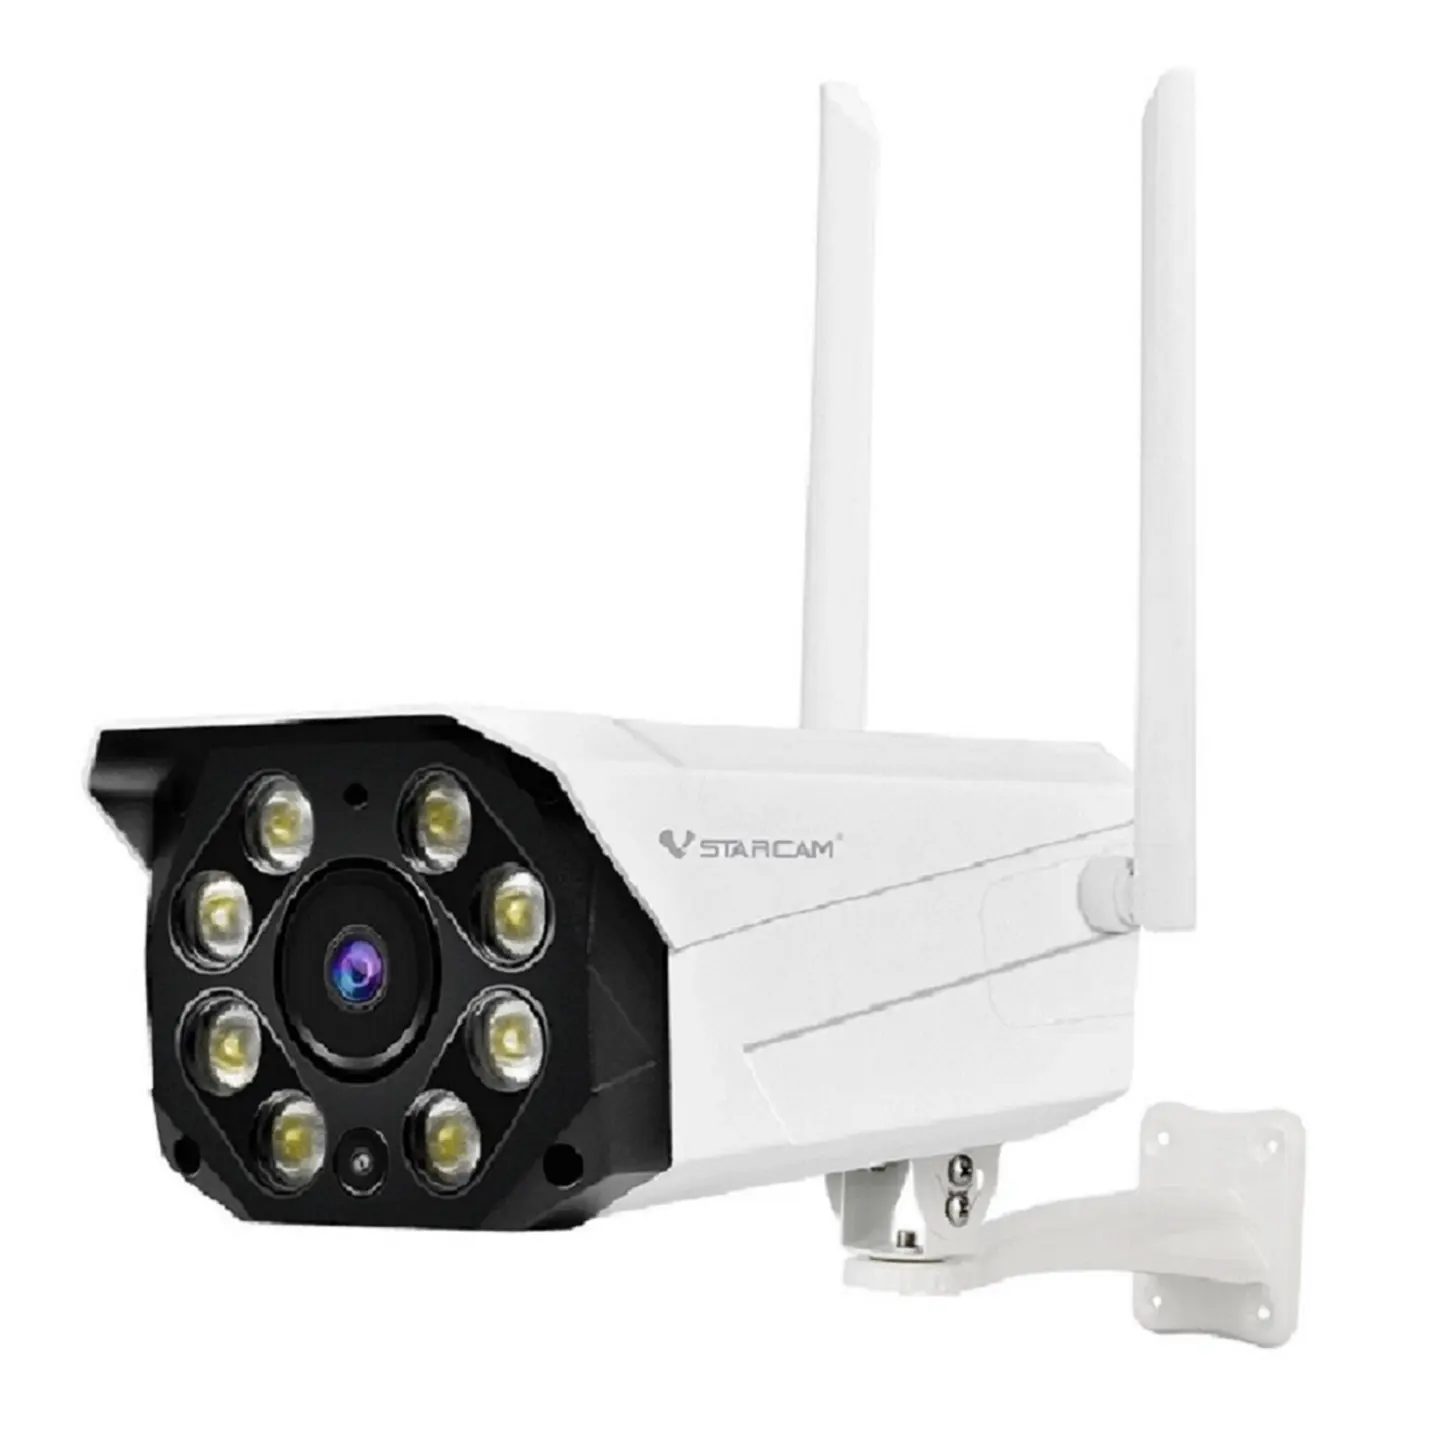 Vstarcam CG550 4G Home Security Camera dual light sources flashing alarm surveillance camera 3MP HD camera outdoor